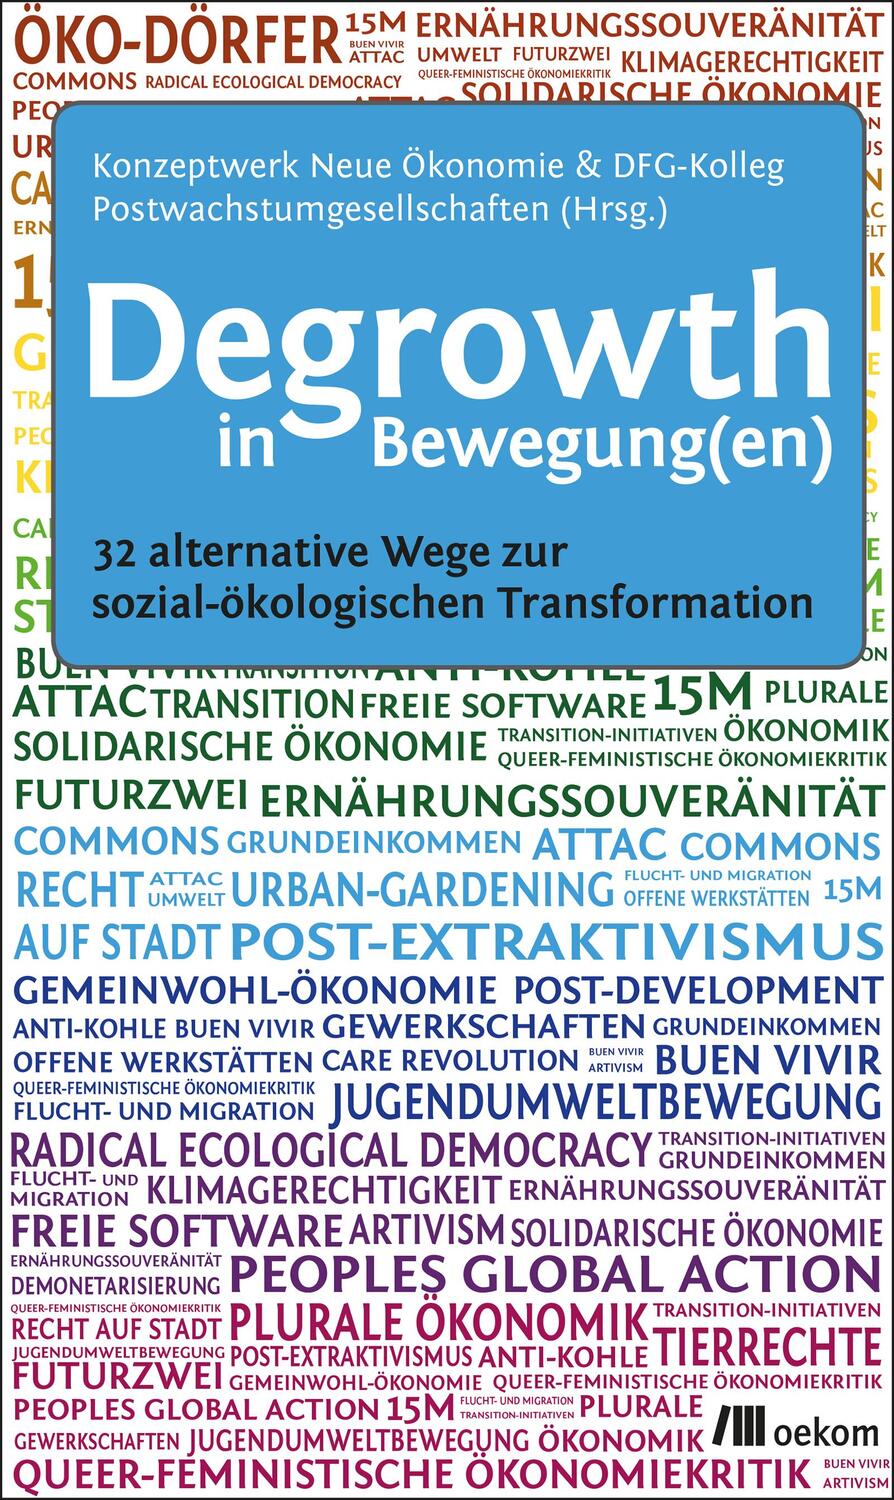 Degrowth in Bewegung(en) - Konzeptwerk Neue Ökonomie e.V.